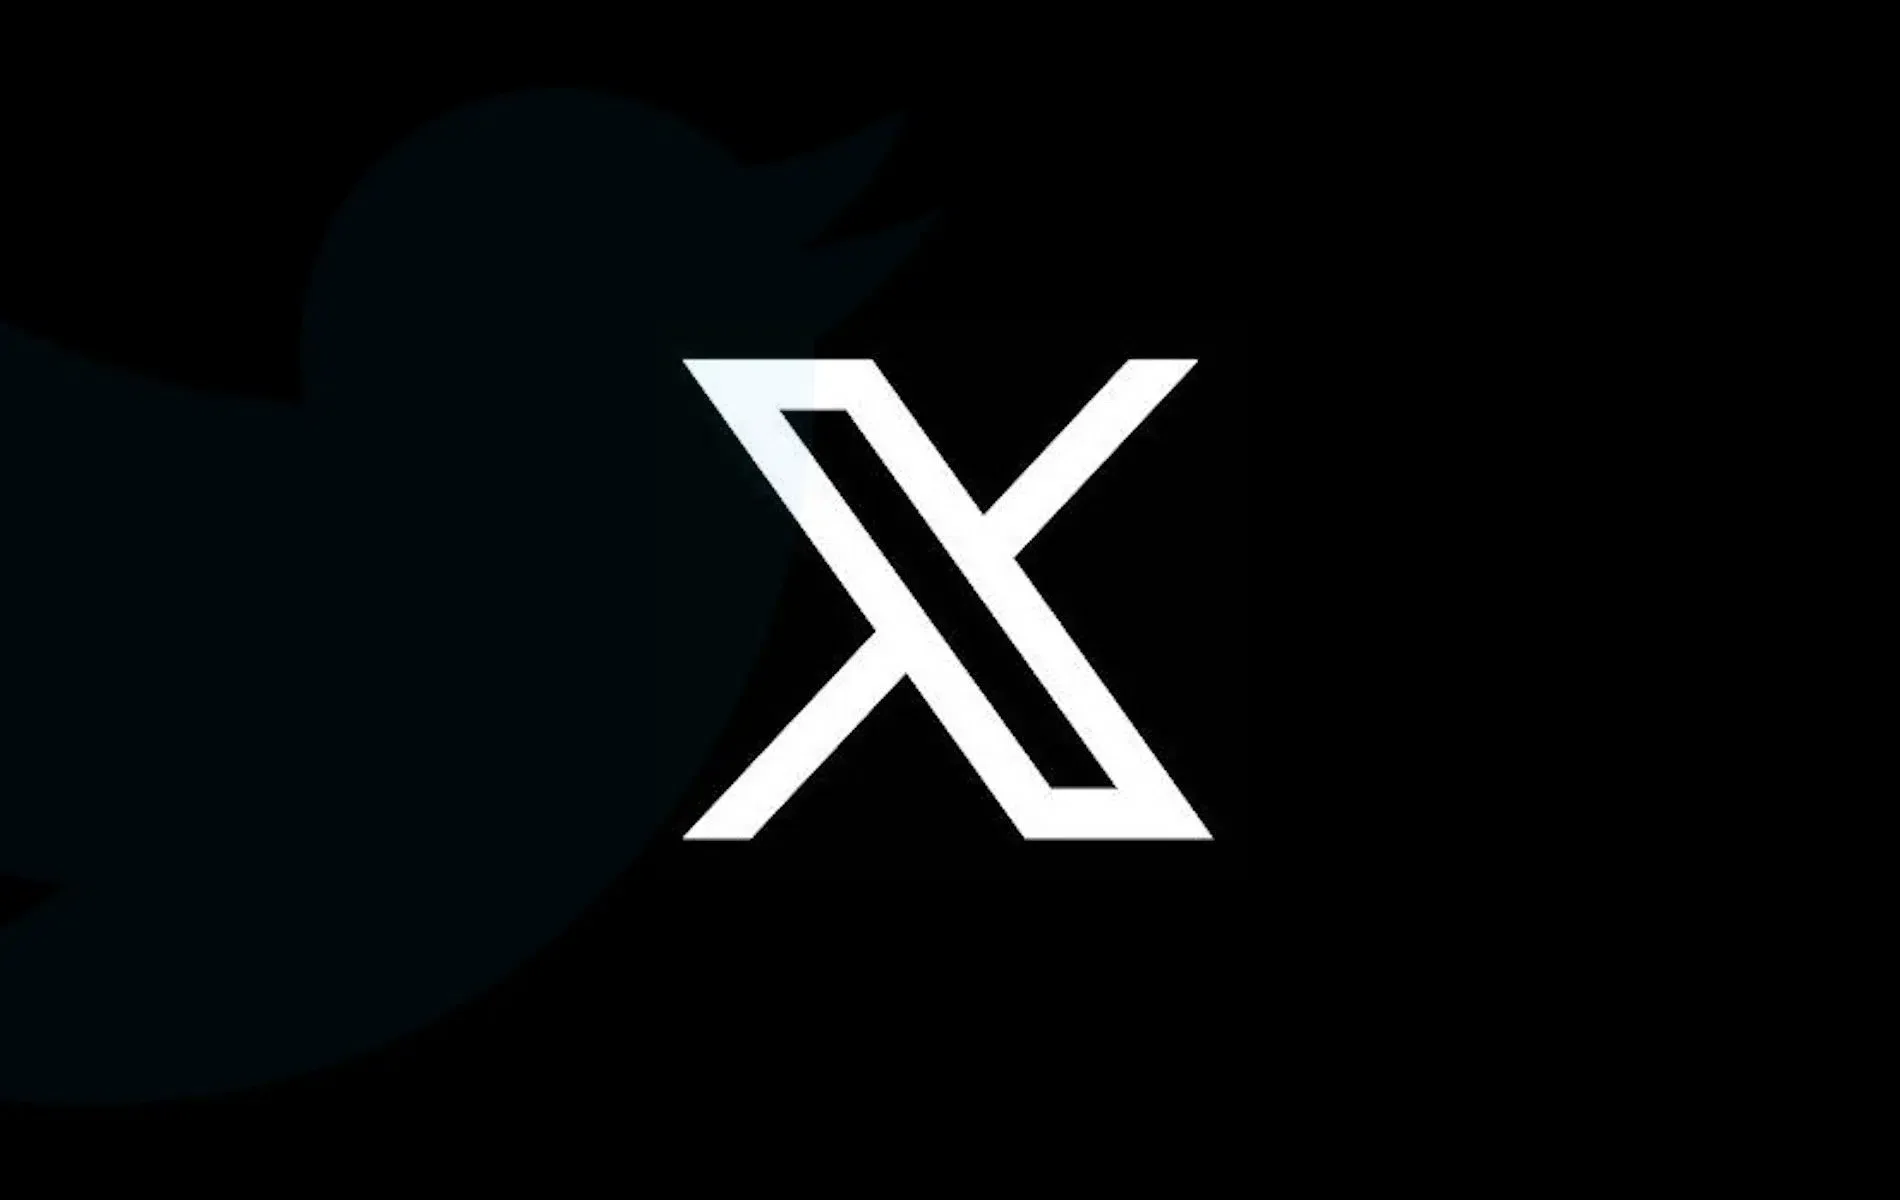 x logo twitter elon musk copie jpg